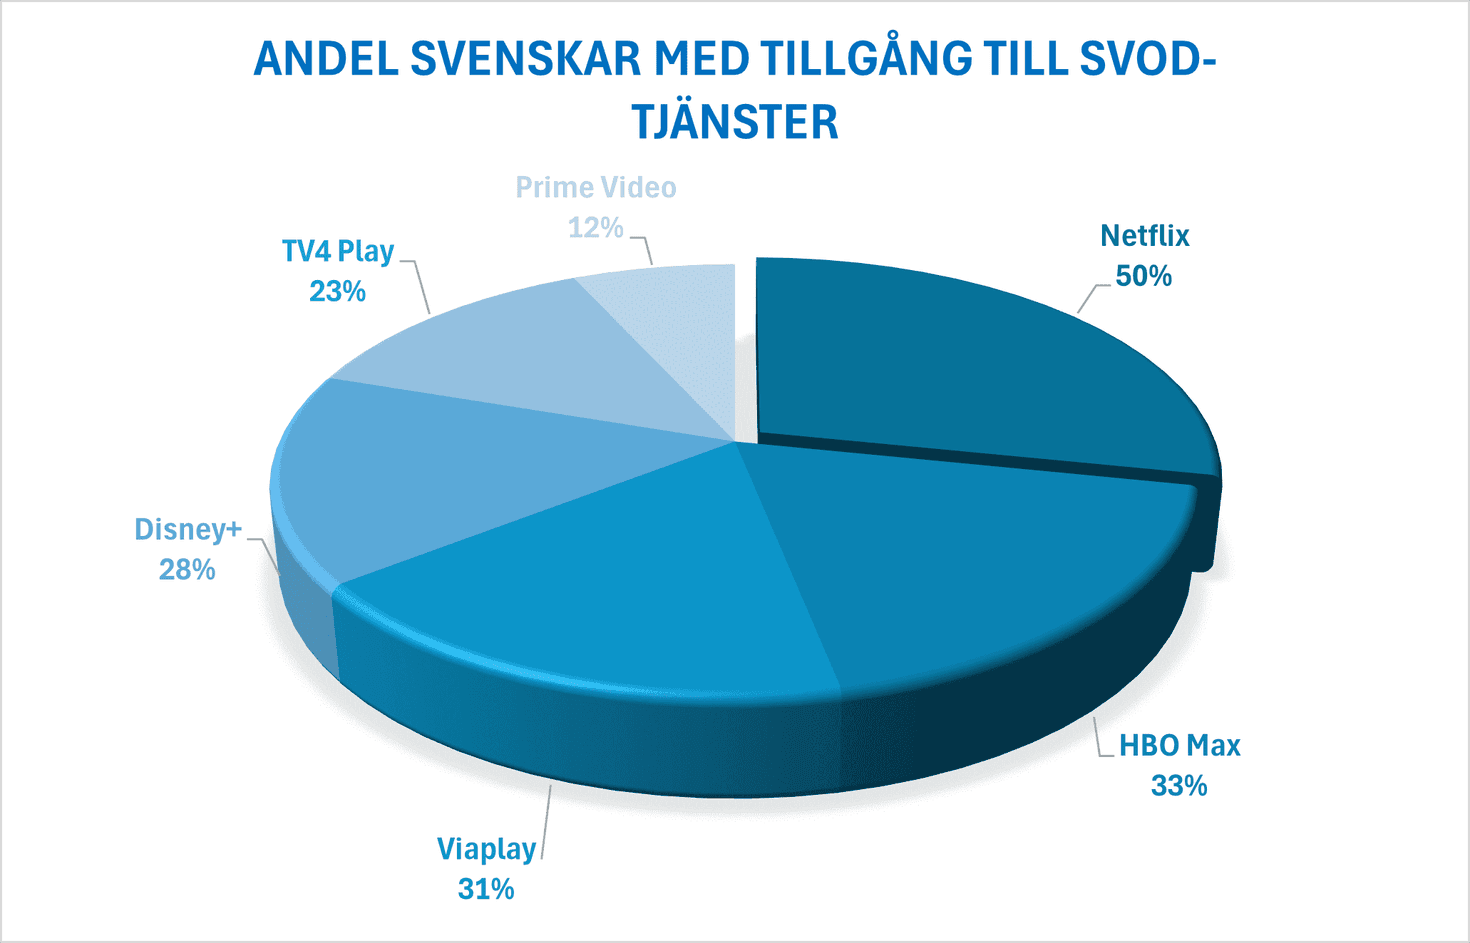 SVoD prenumerationer i Sverige